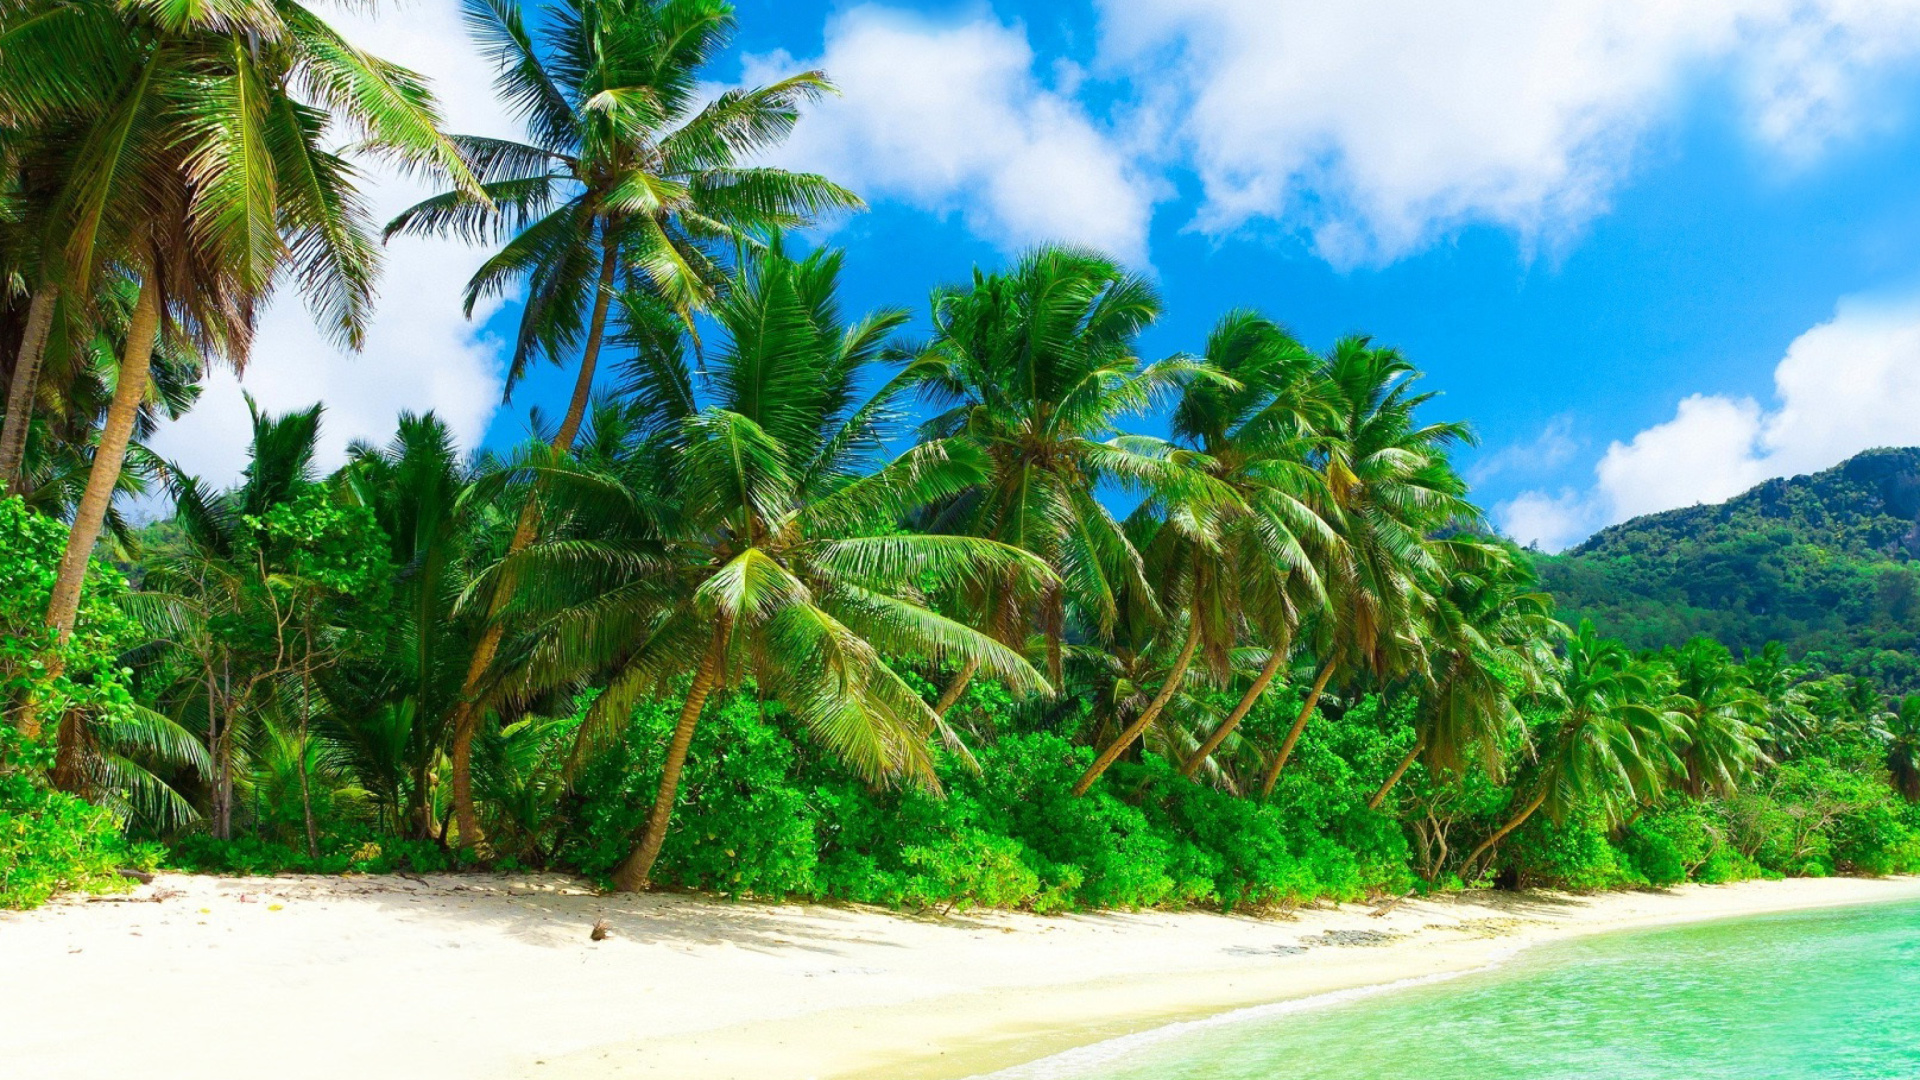 Tropical Landscape and Lagoon HD Wallpaper for Desktop 1920x1080 Full HD